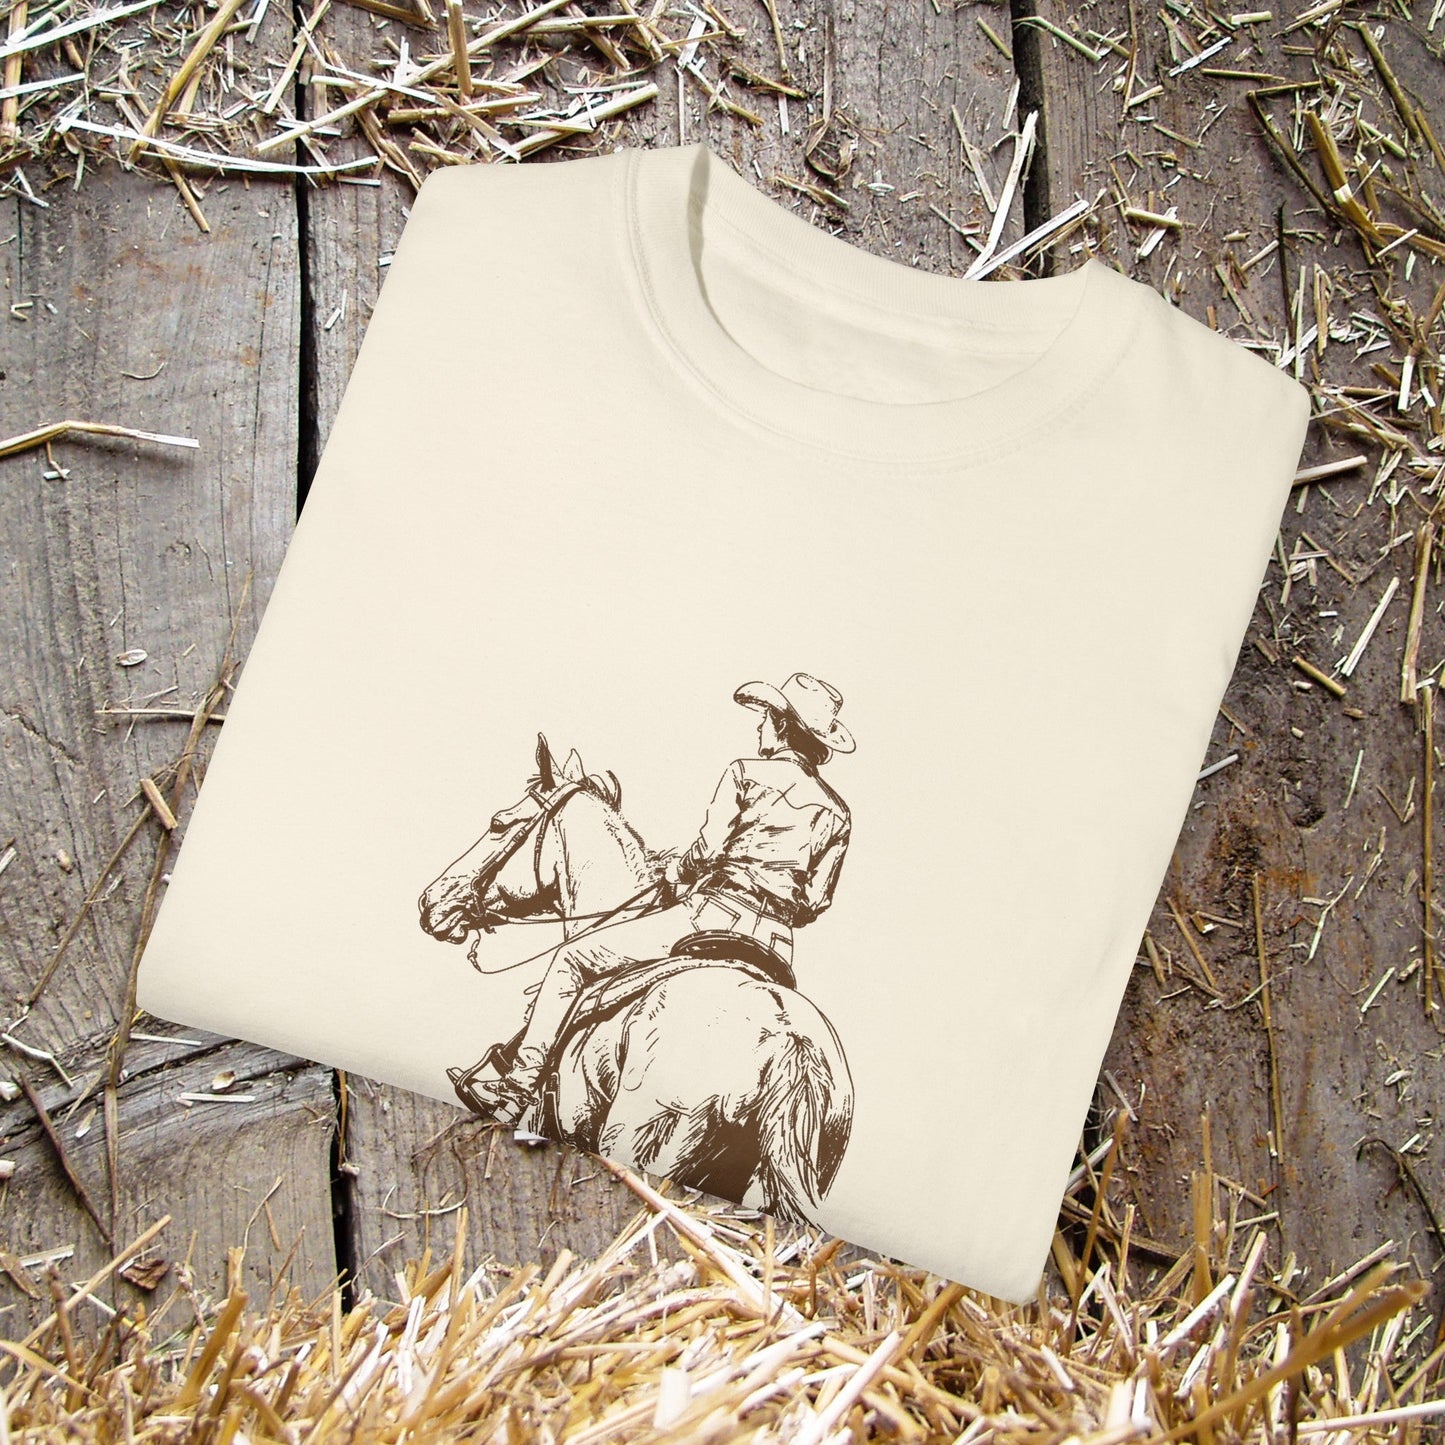 Comfort Color Horse Shirt, New Horse Drawing, "Country Life" Horse Art Tee, Horse Lover Shirt - FlooredByArt